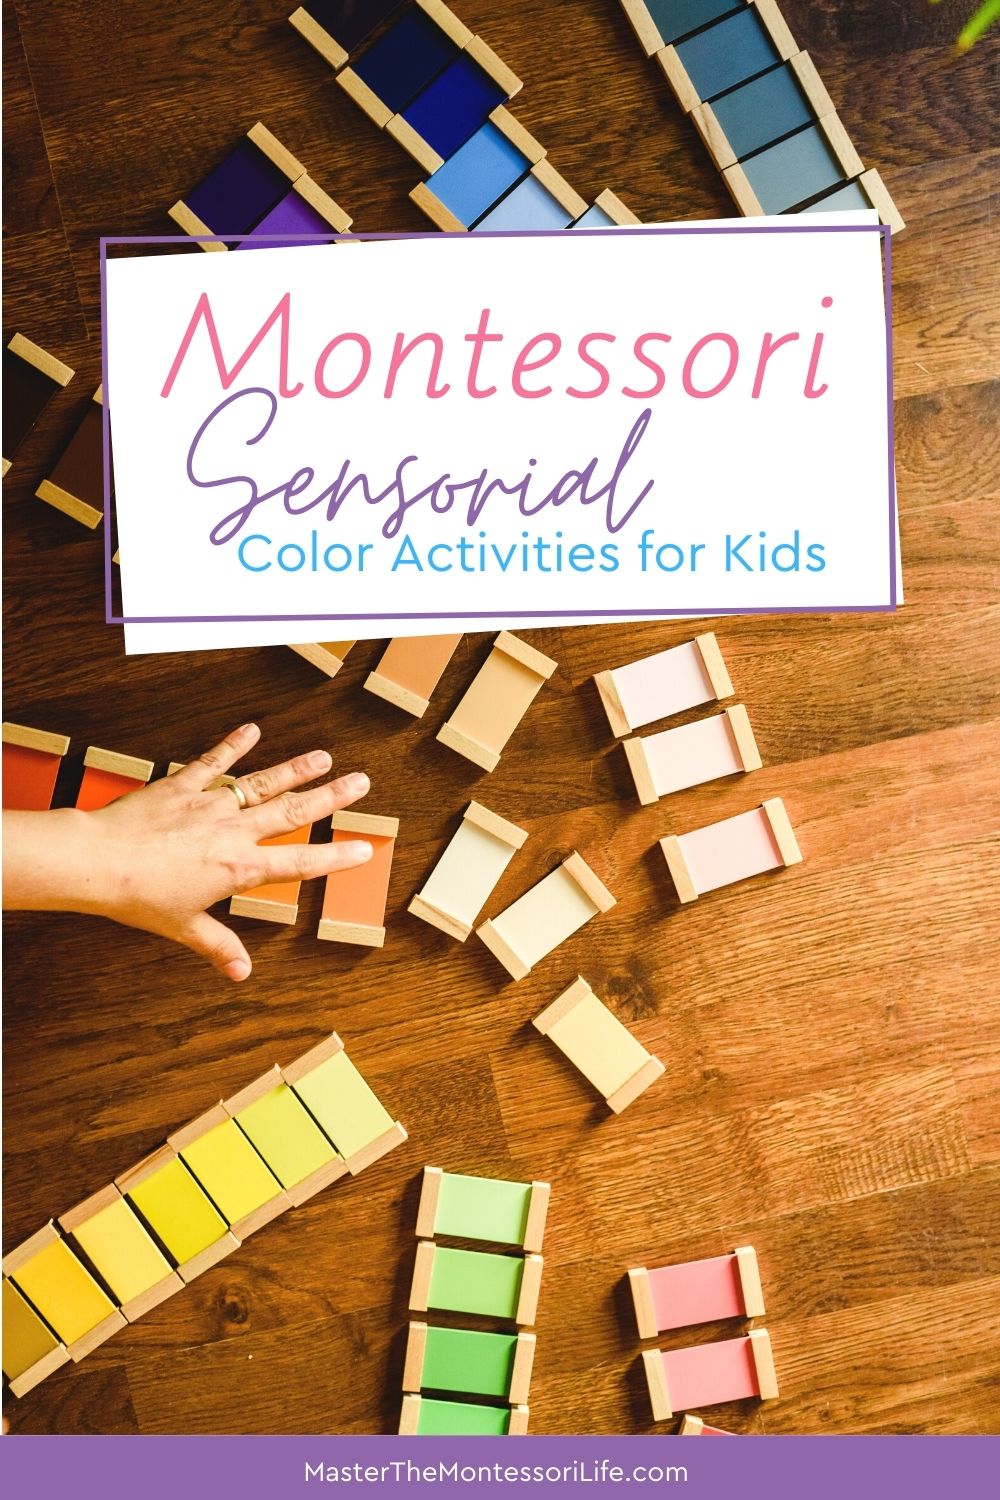 https://masterthemontessorilife.com/wp-content/uploads/2021/07/Montessori-Sensorial-Color-Activities-for-Kids-1.jpg